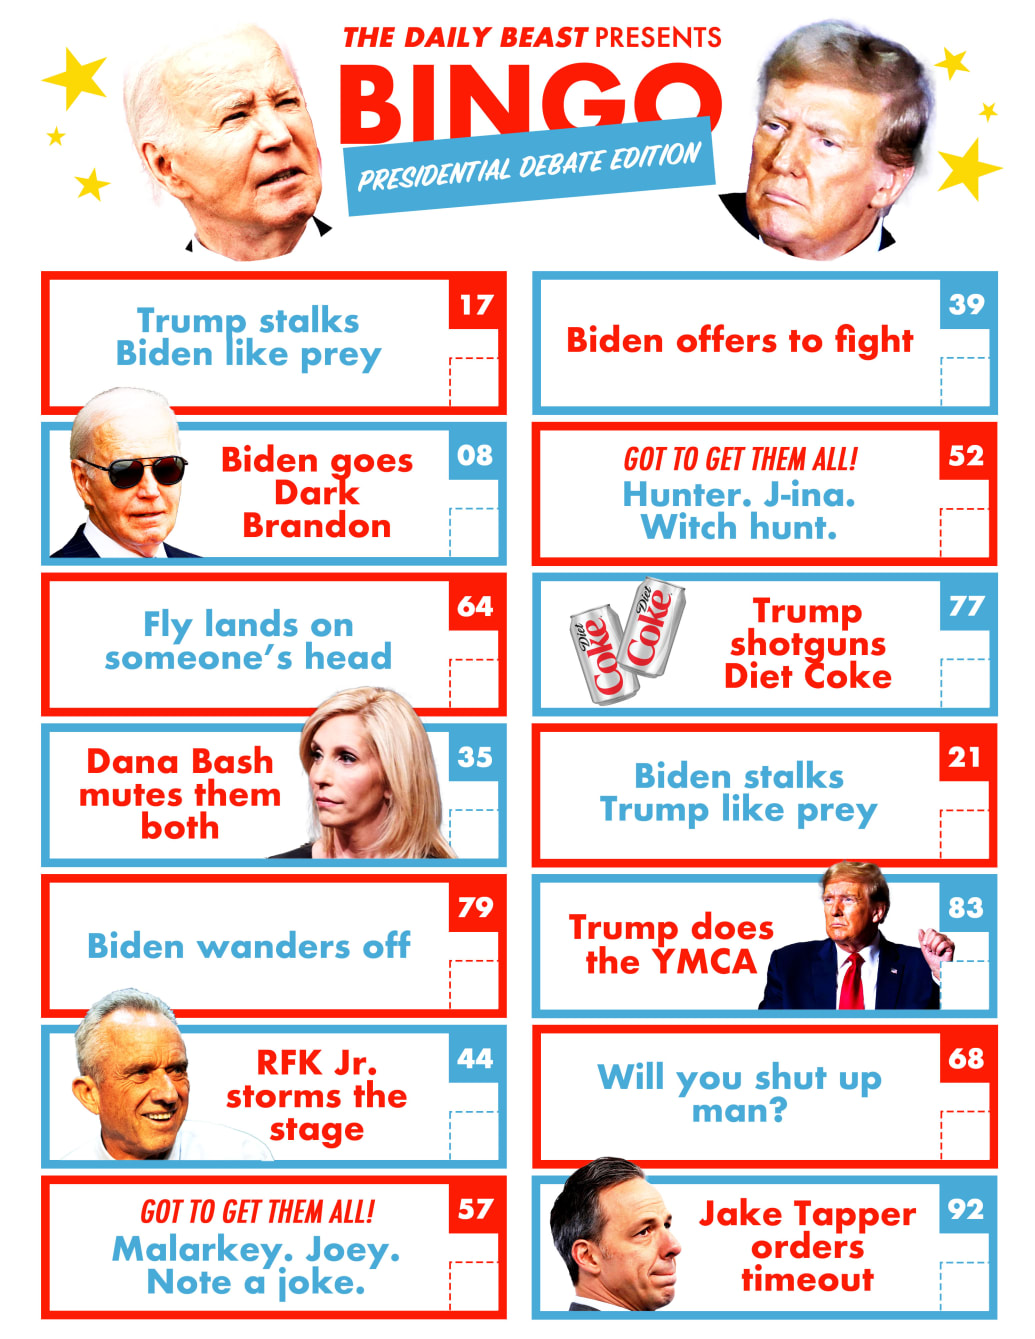 Presidential debate bingo card with Joe Biden and Donald Trump